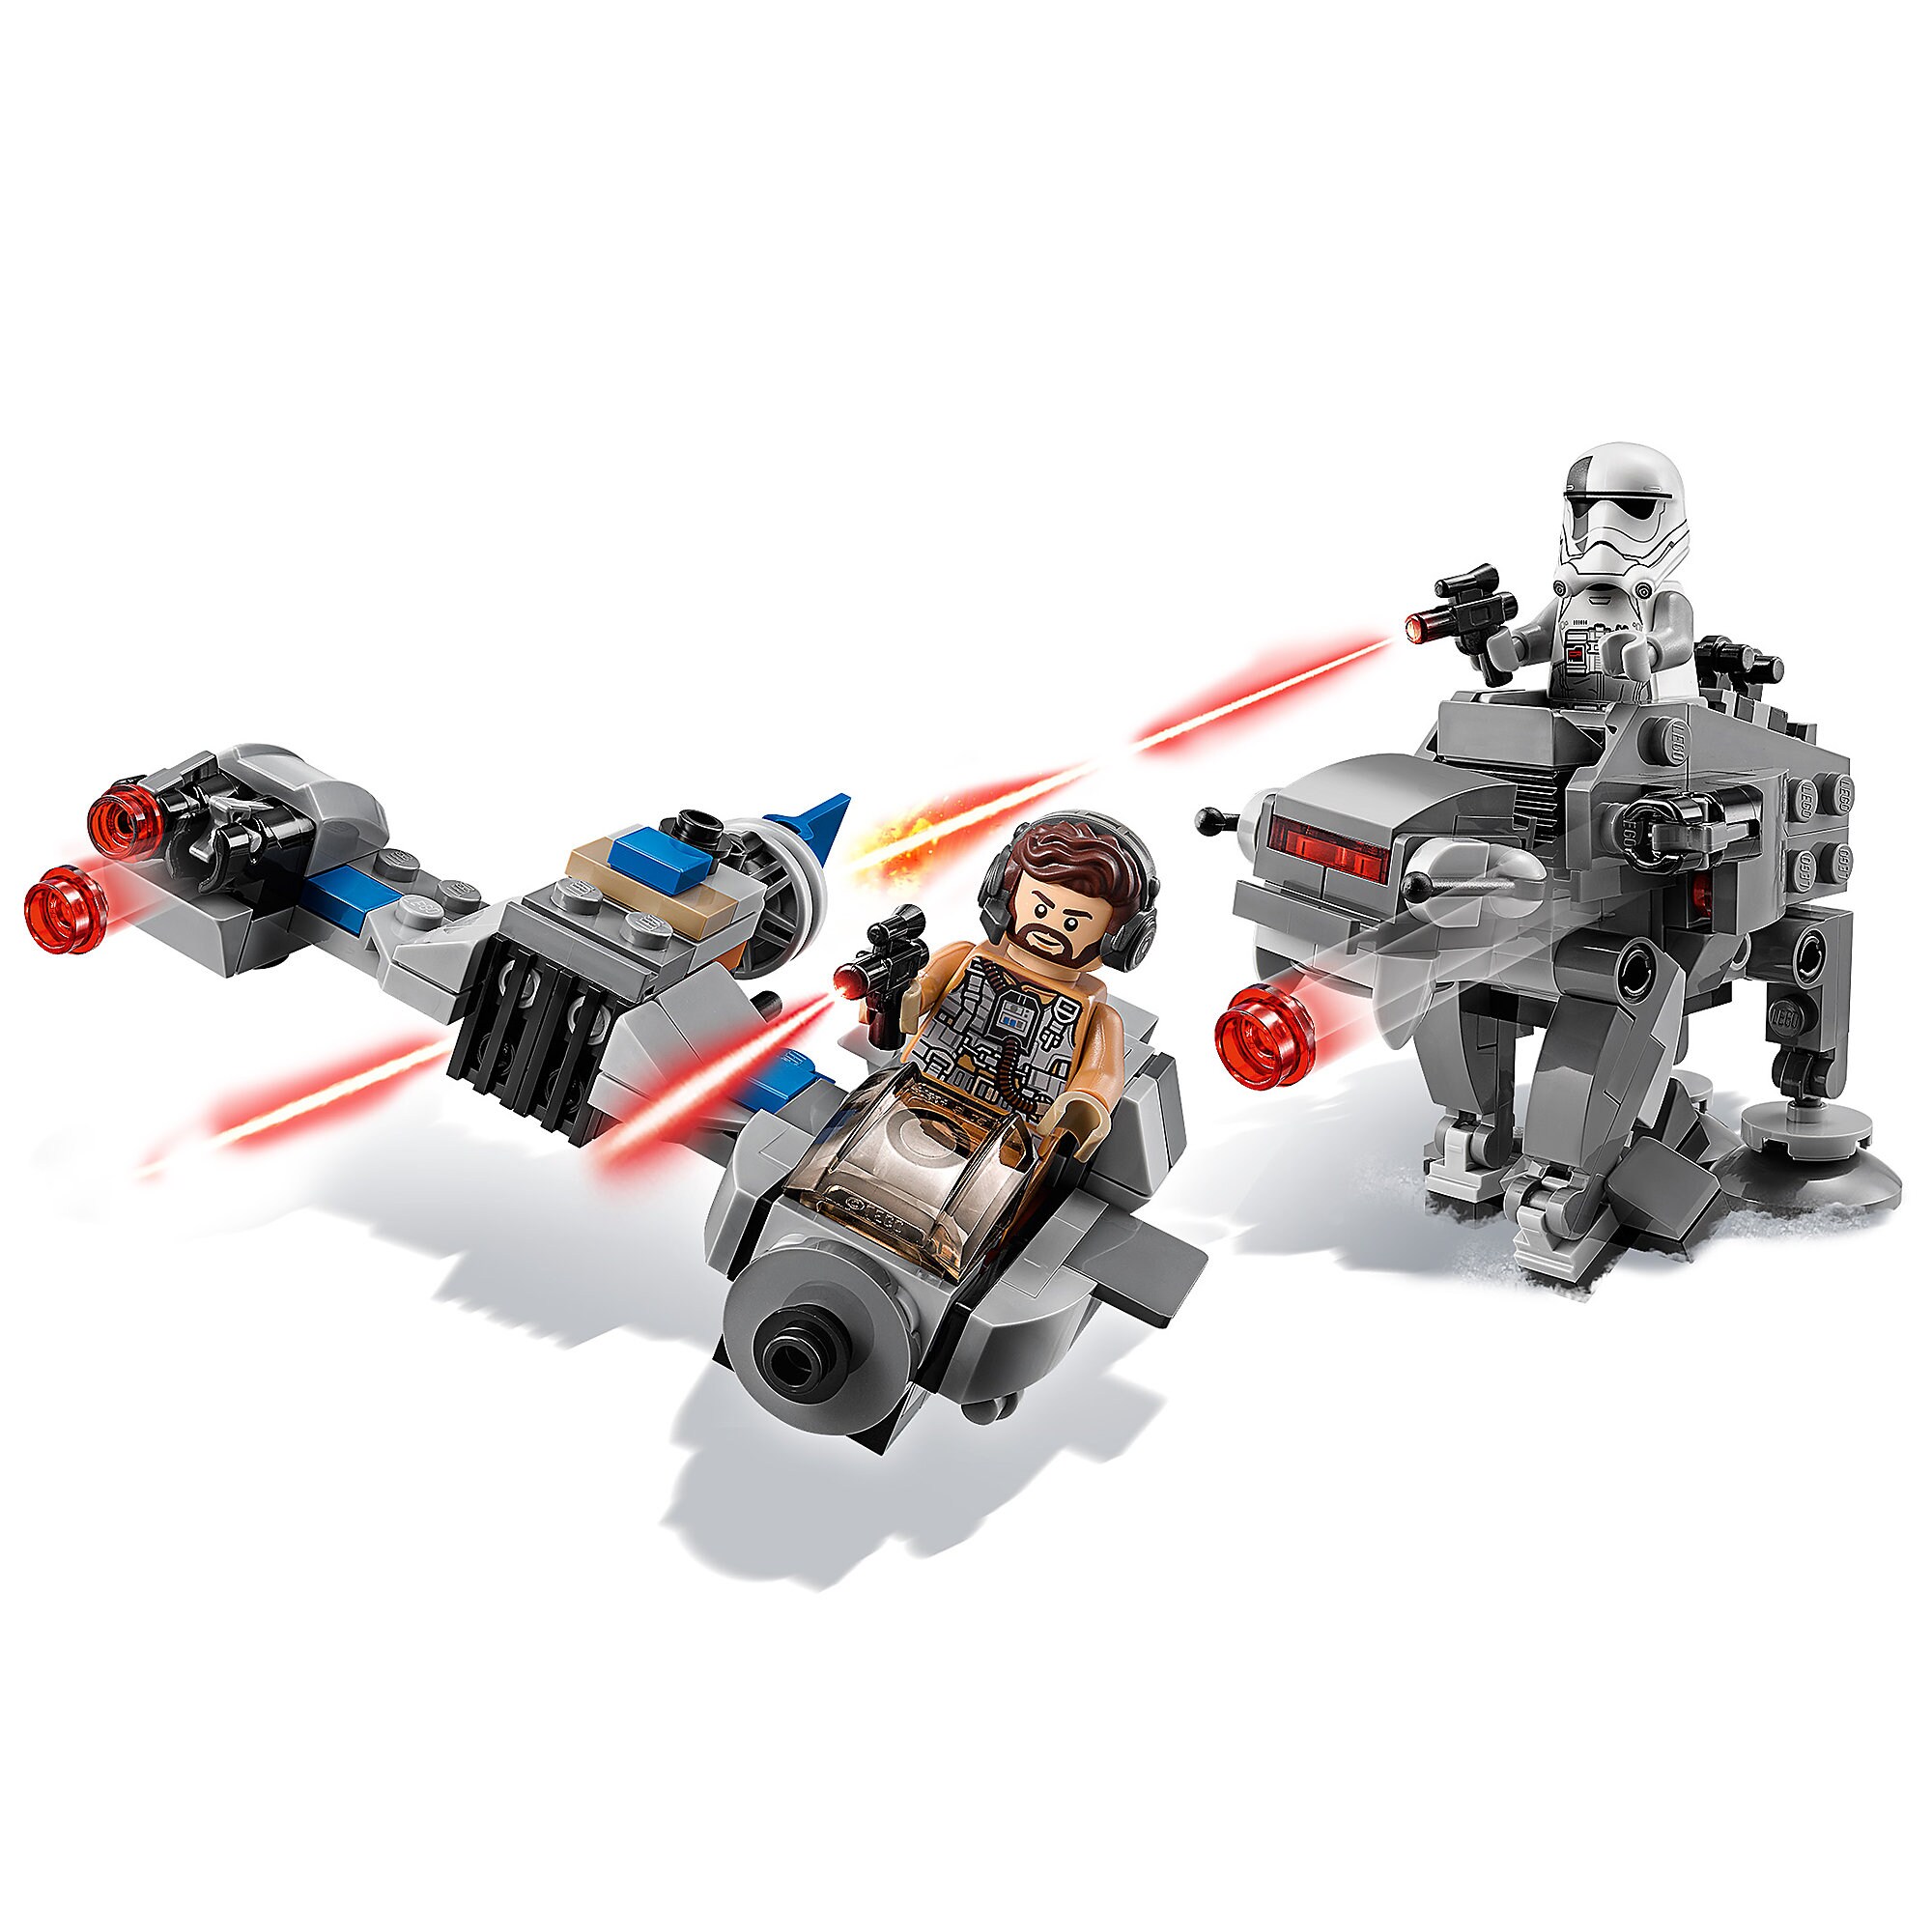 Ski Speeder vs. First Order Walker Microfighters Playset by LEGO - Star Wars: The Last Jedi